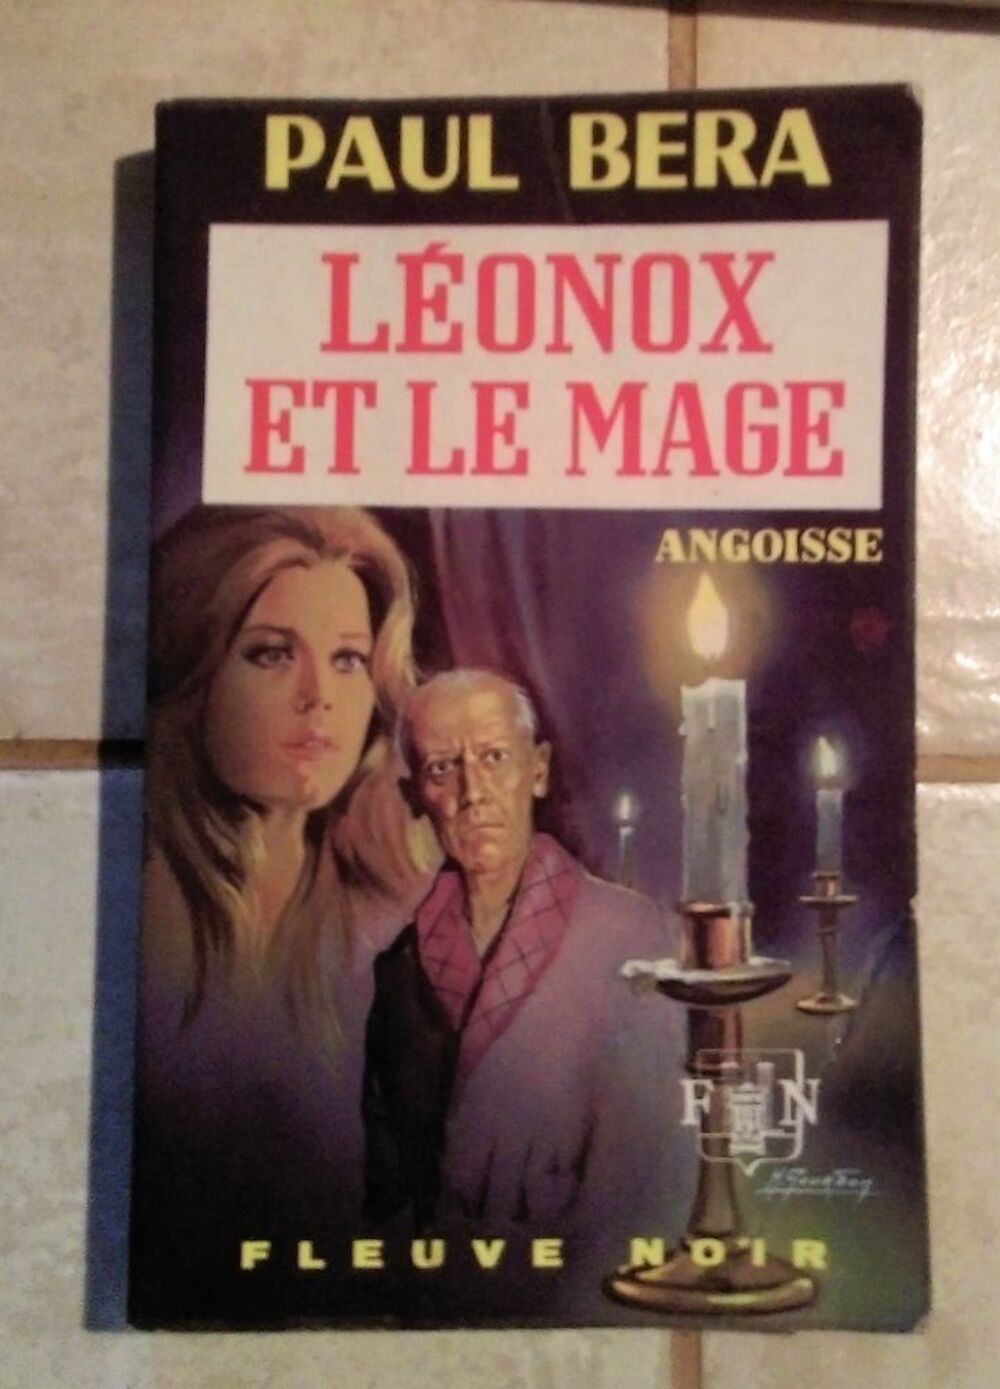 L&eacute;onox et le mage Coll Angoisse n&deg; 242 1973 B&eacute;ra Paul -0.70 Livres et BD